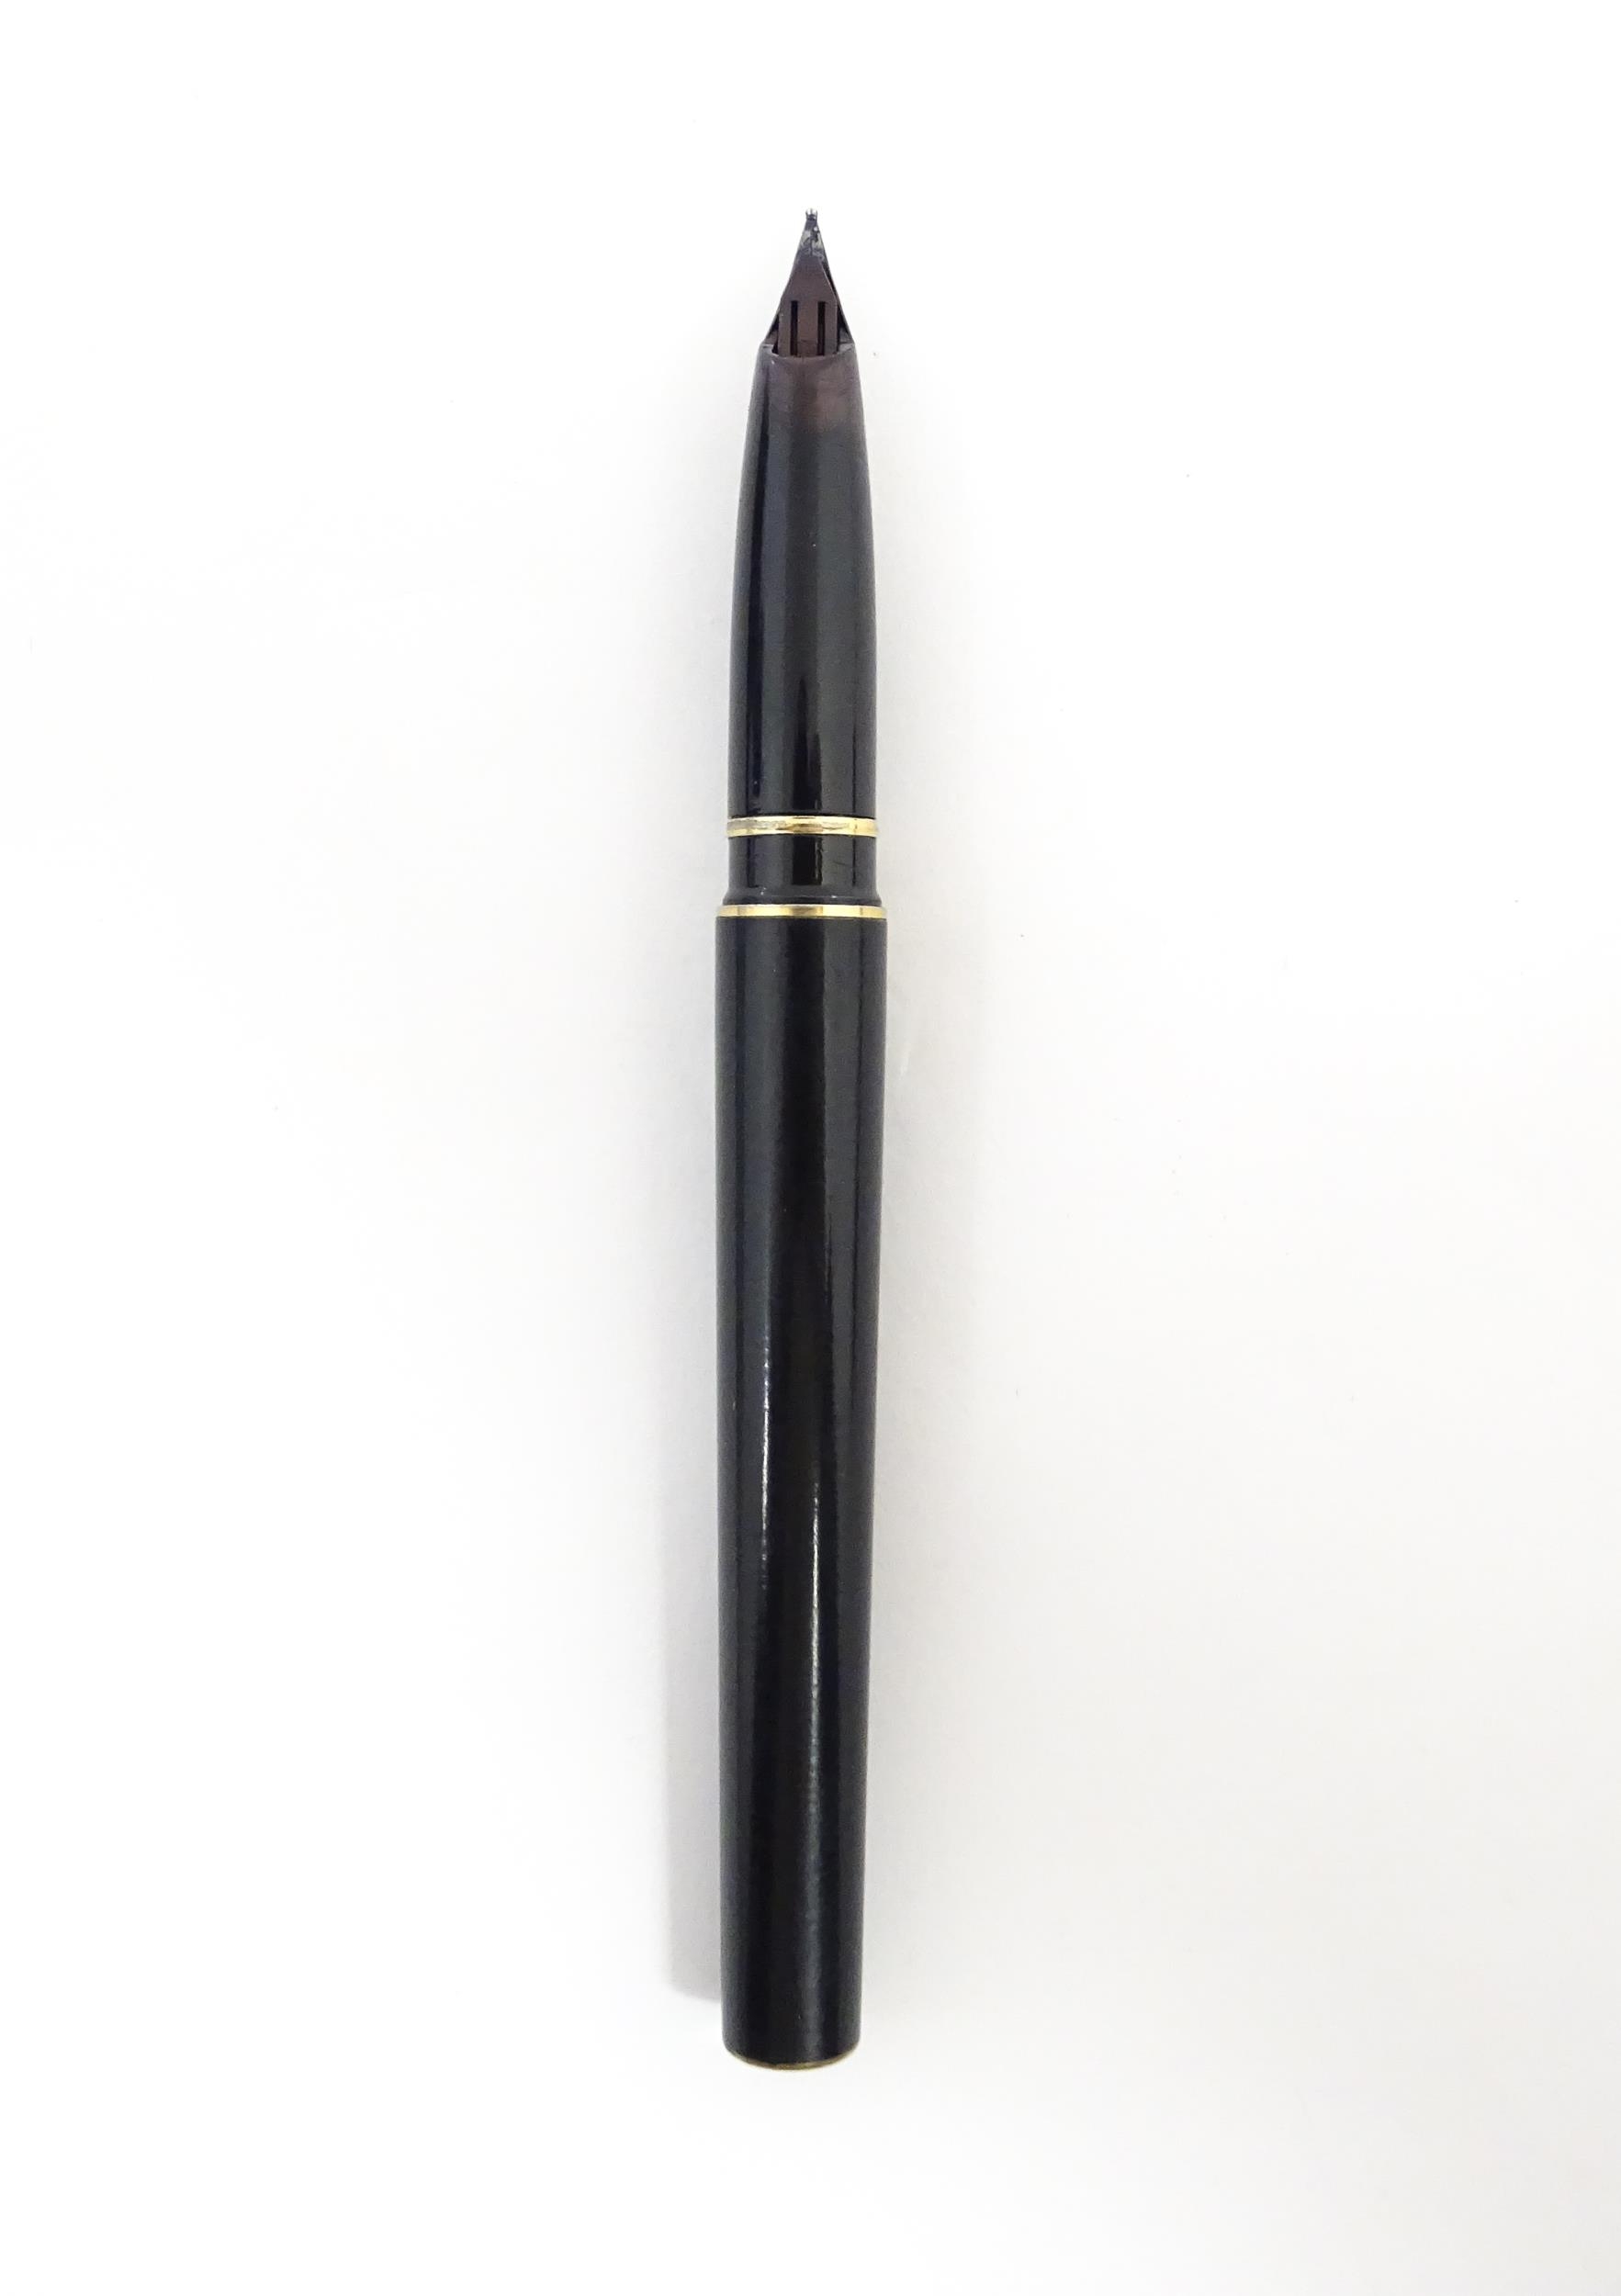 A Schaeffer 'Targa' fountain pen, with black barrel and cap, 14k gold nib, approx 5 3/8" long Please - Image 8 of 10